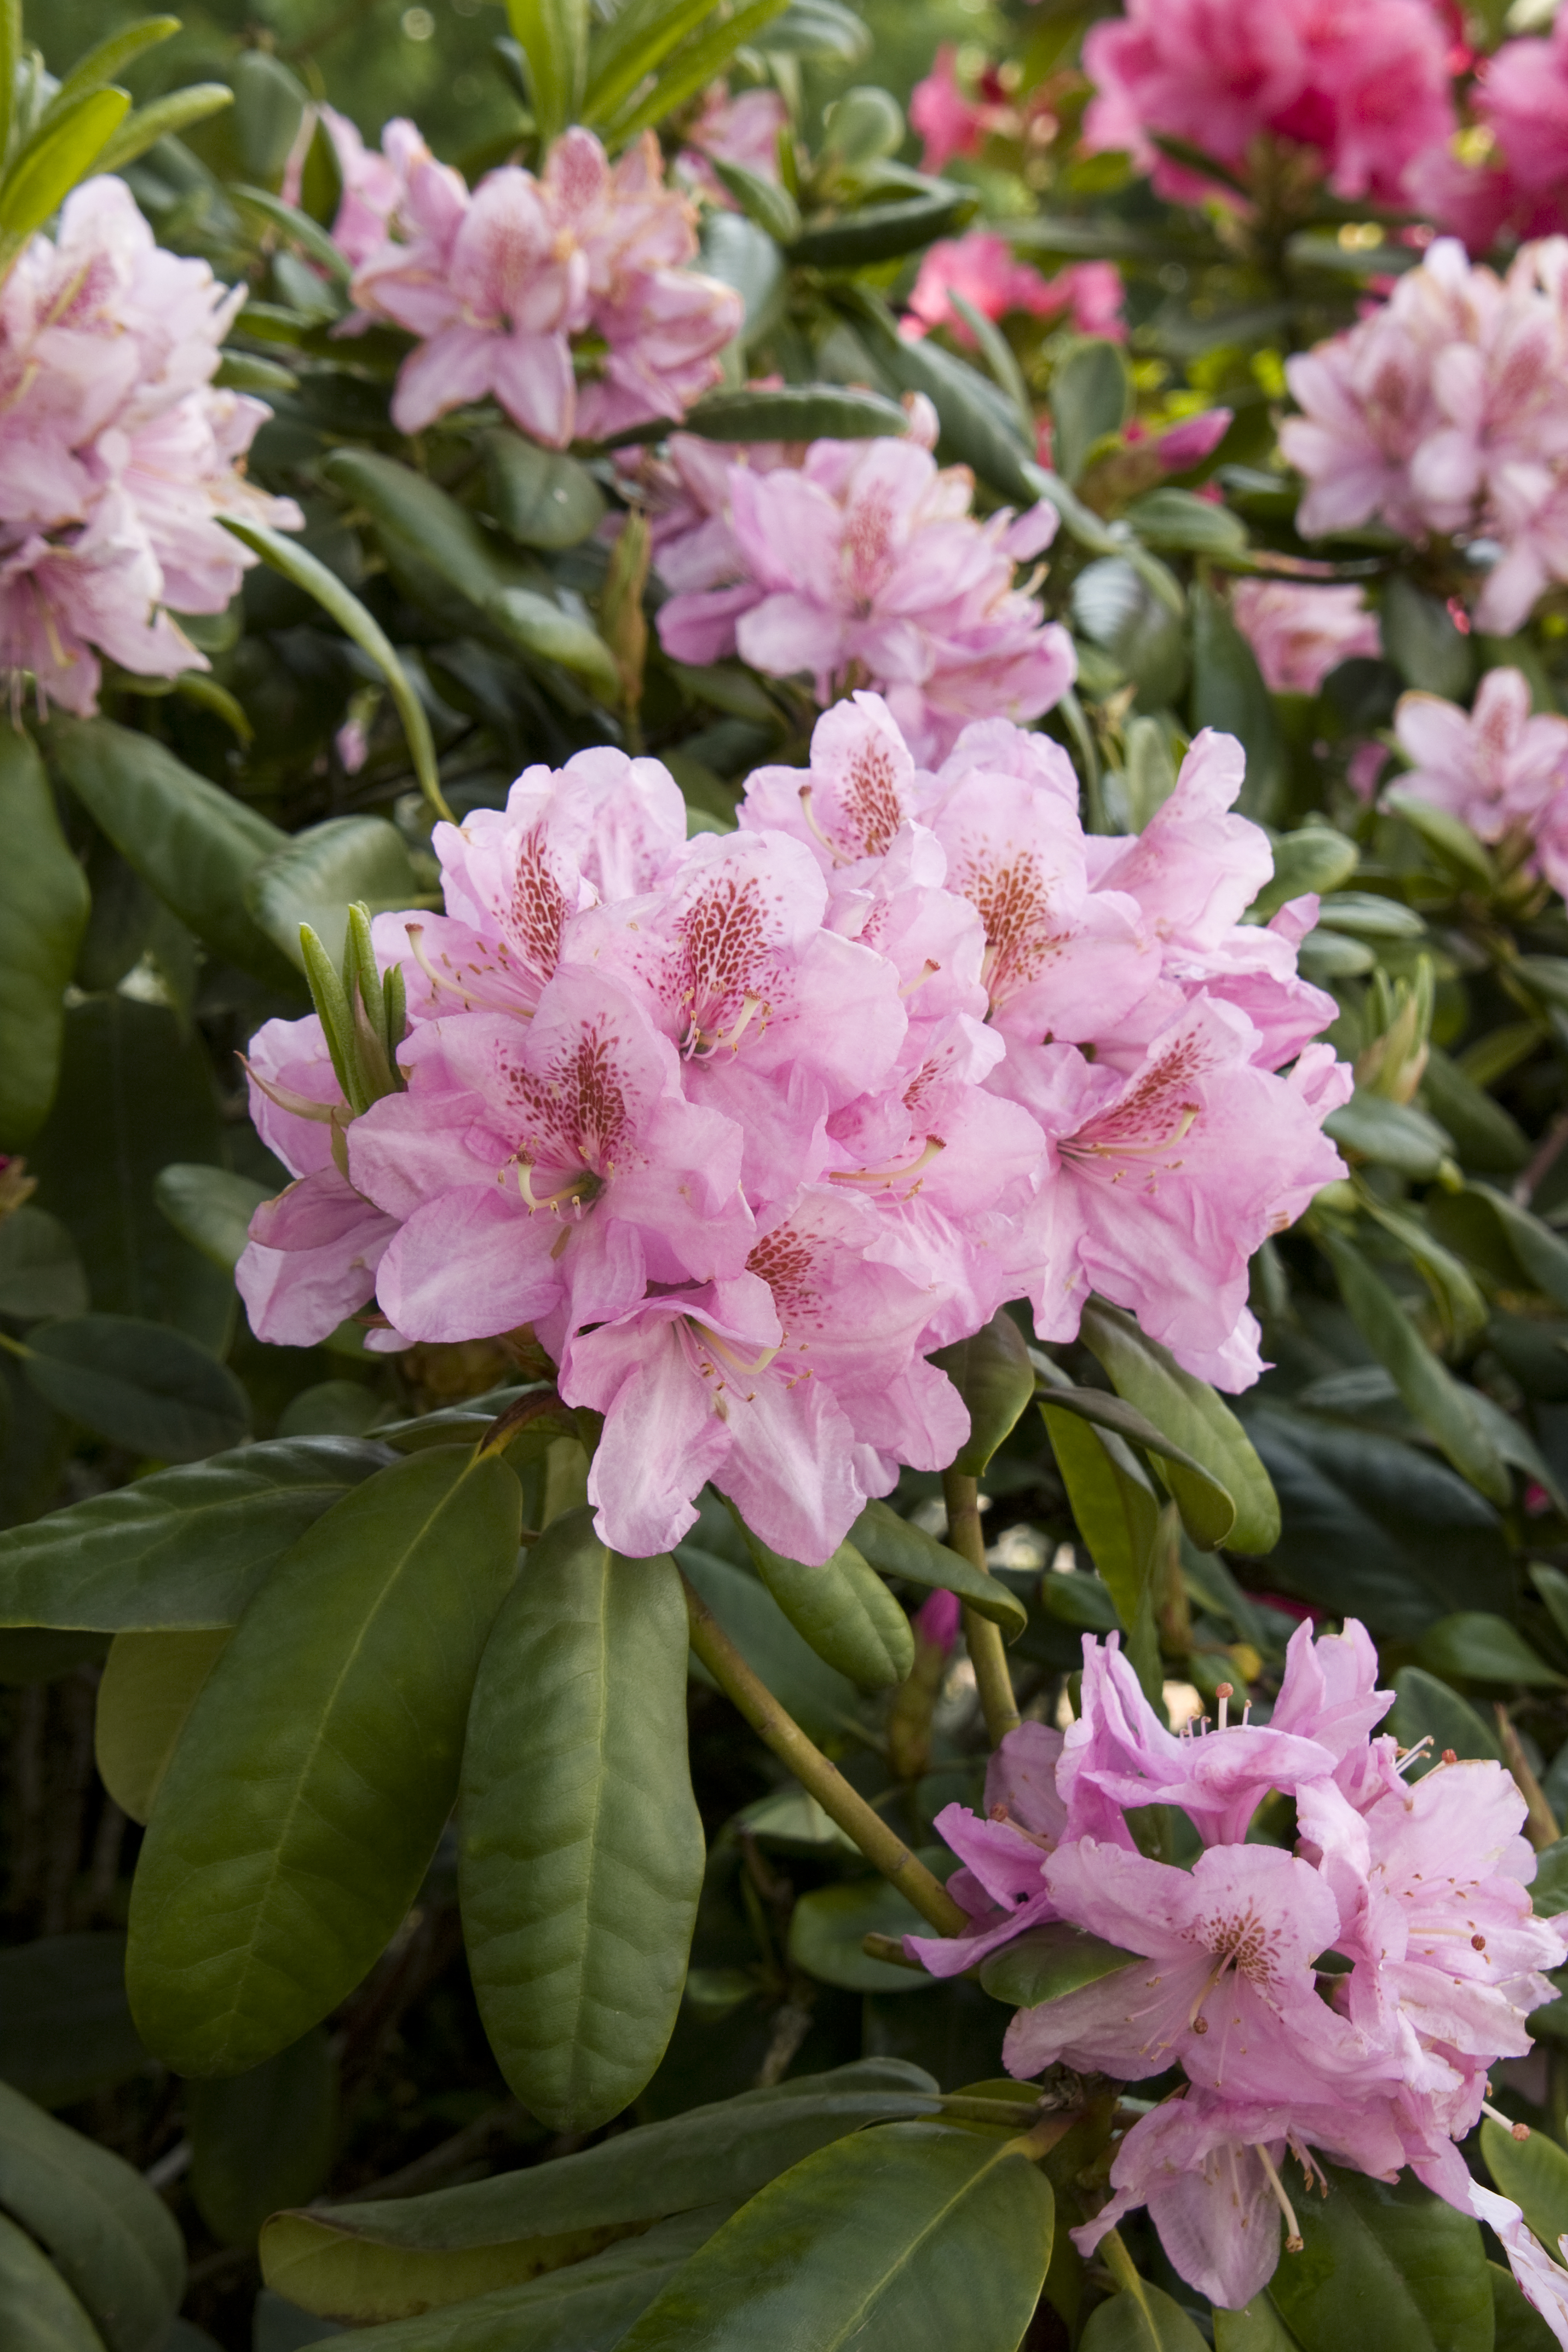 Scintillation Rhododendron - Monrovia - Scintillation Rhododendron